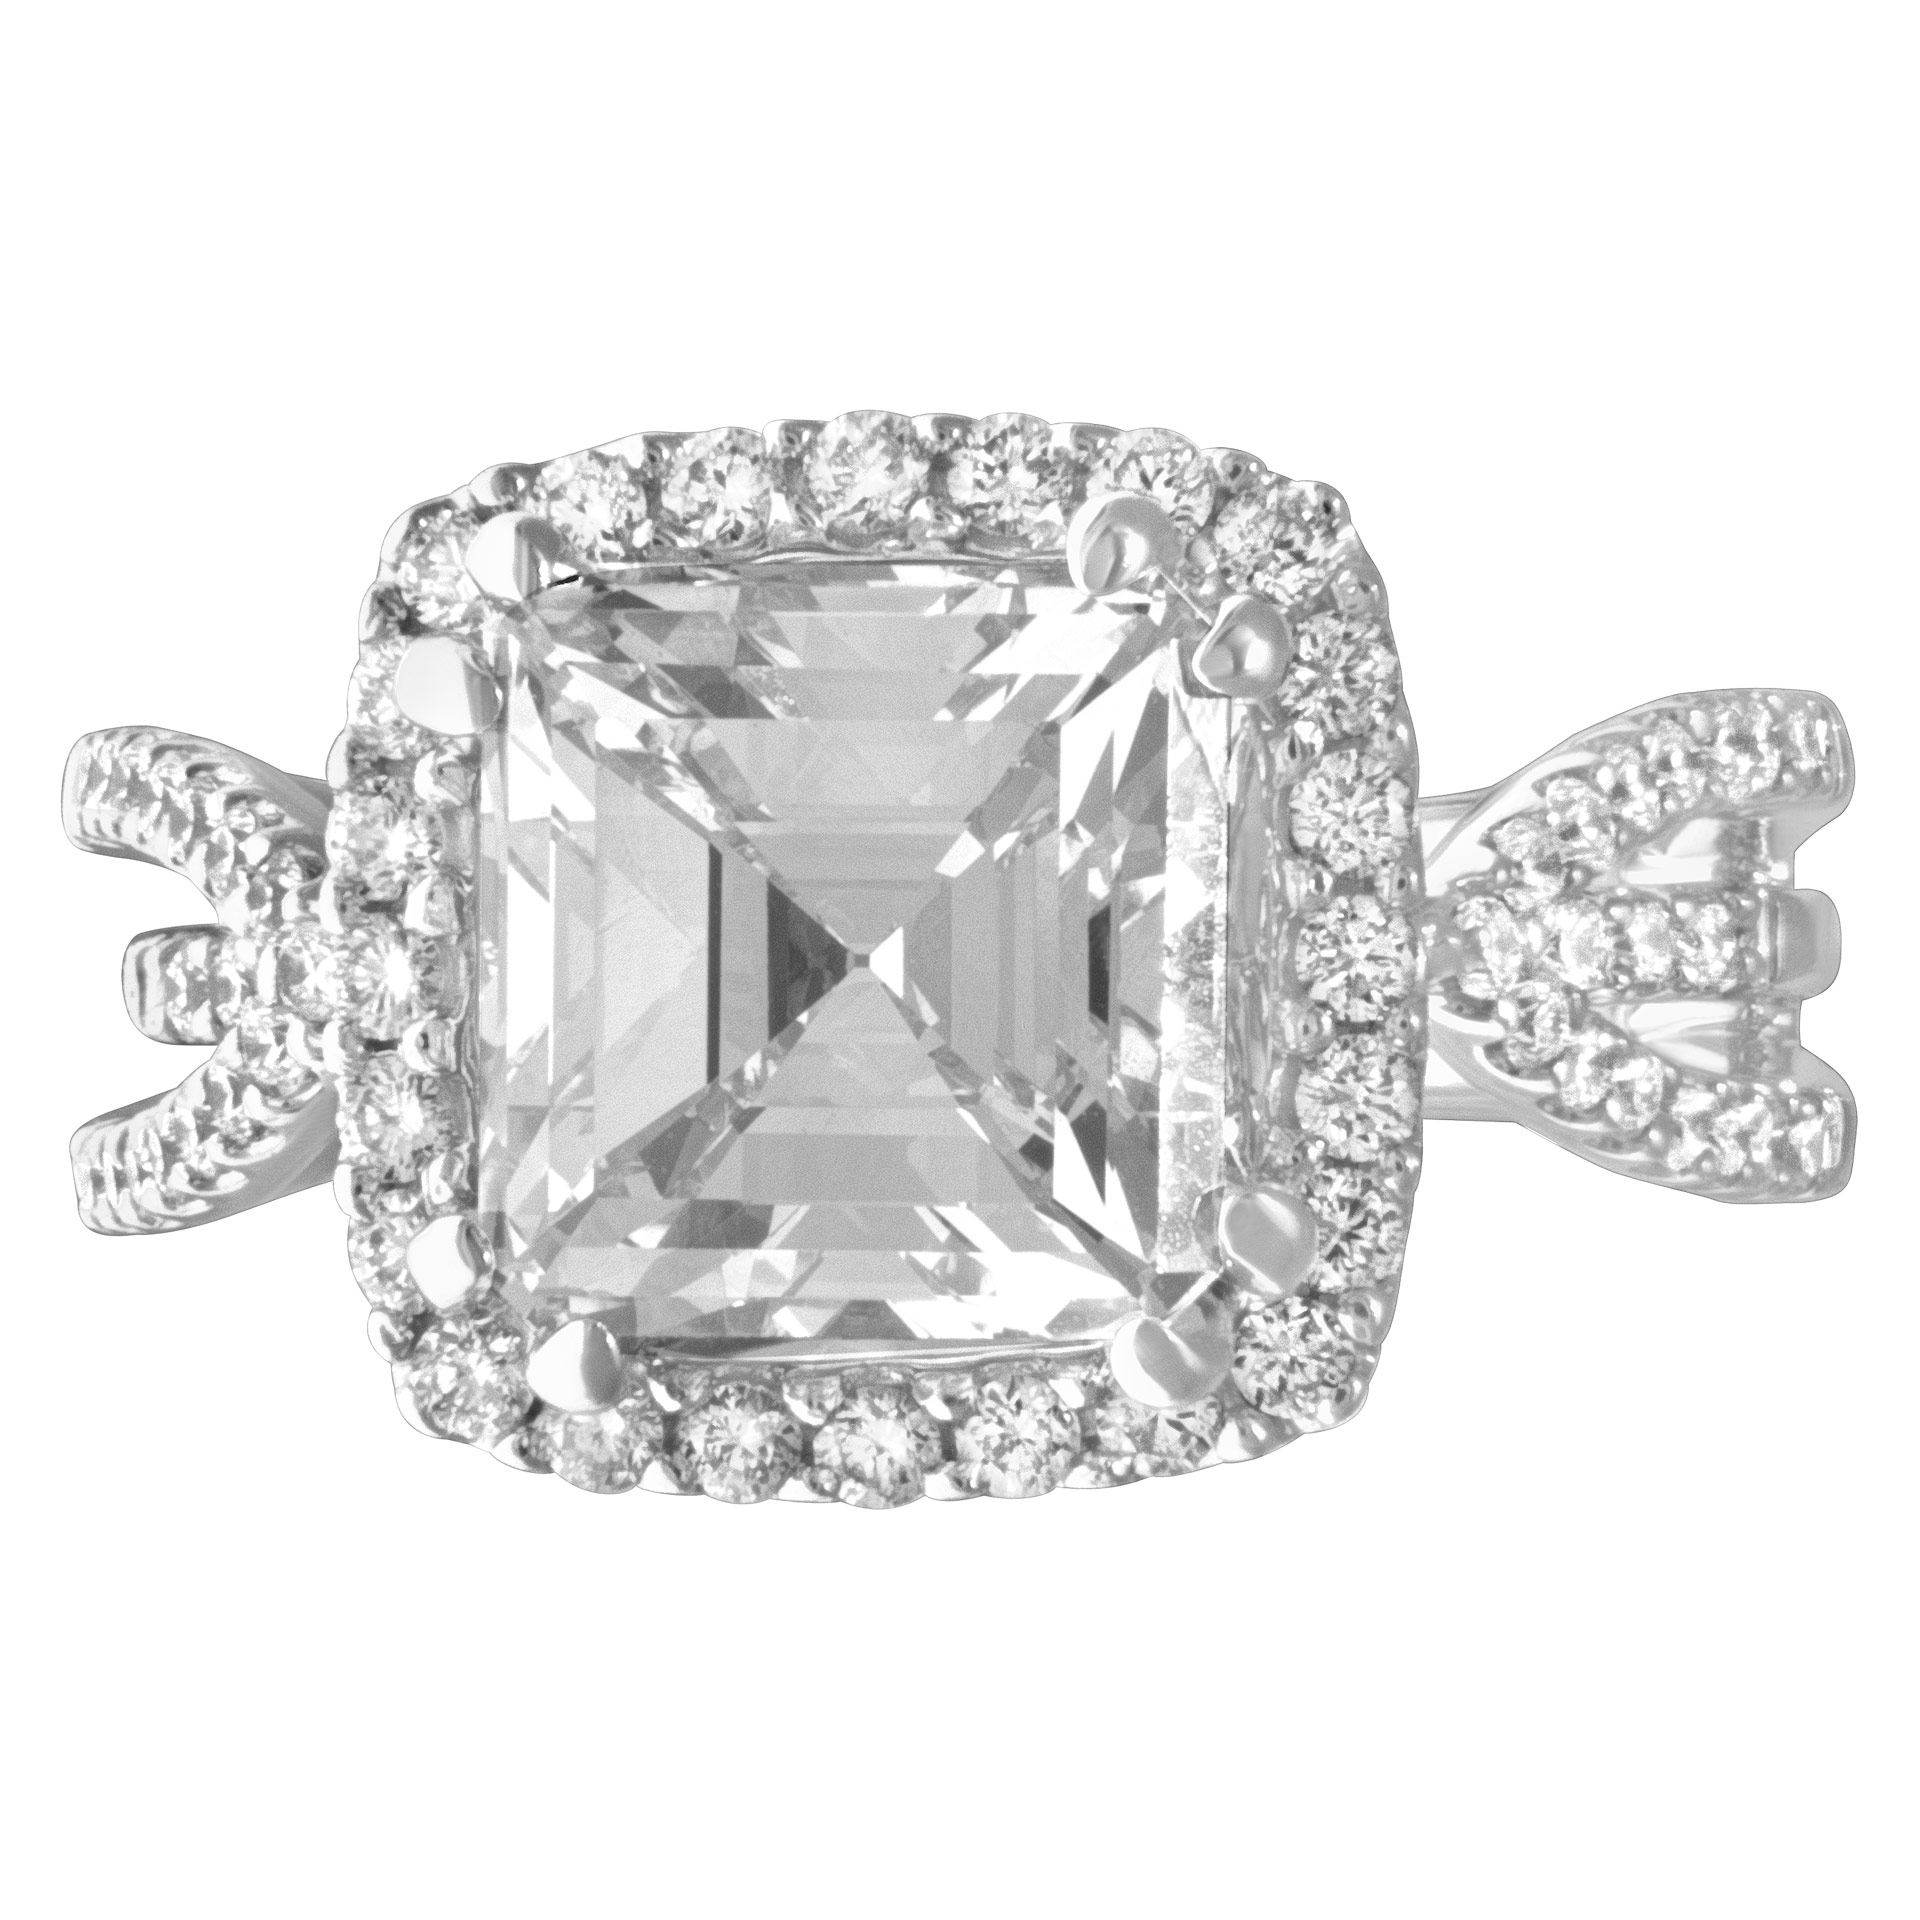 GIA certified Square Emerald cut diamond 4.12 carat  (J color VS2 clarity)